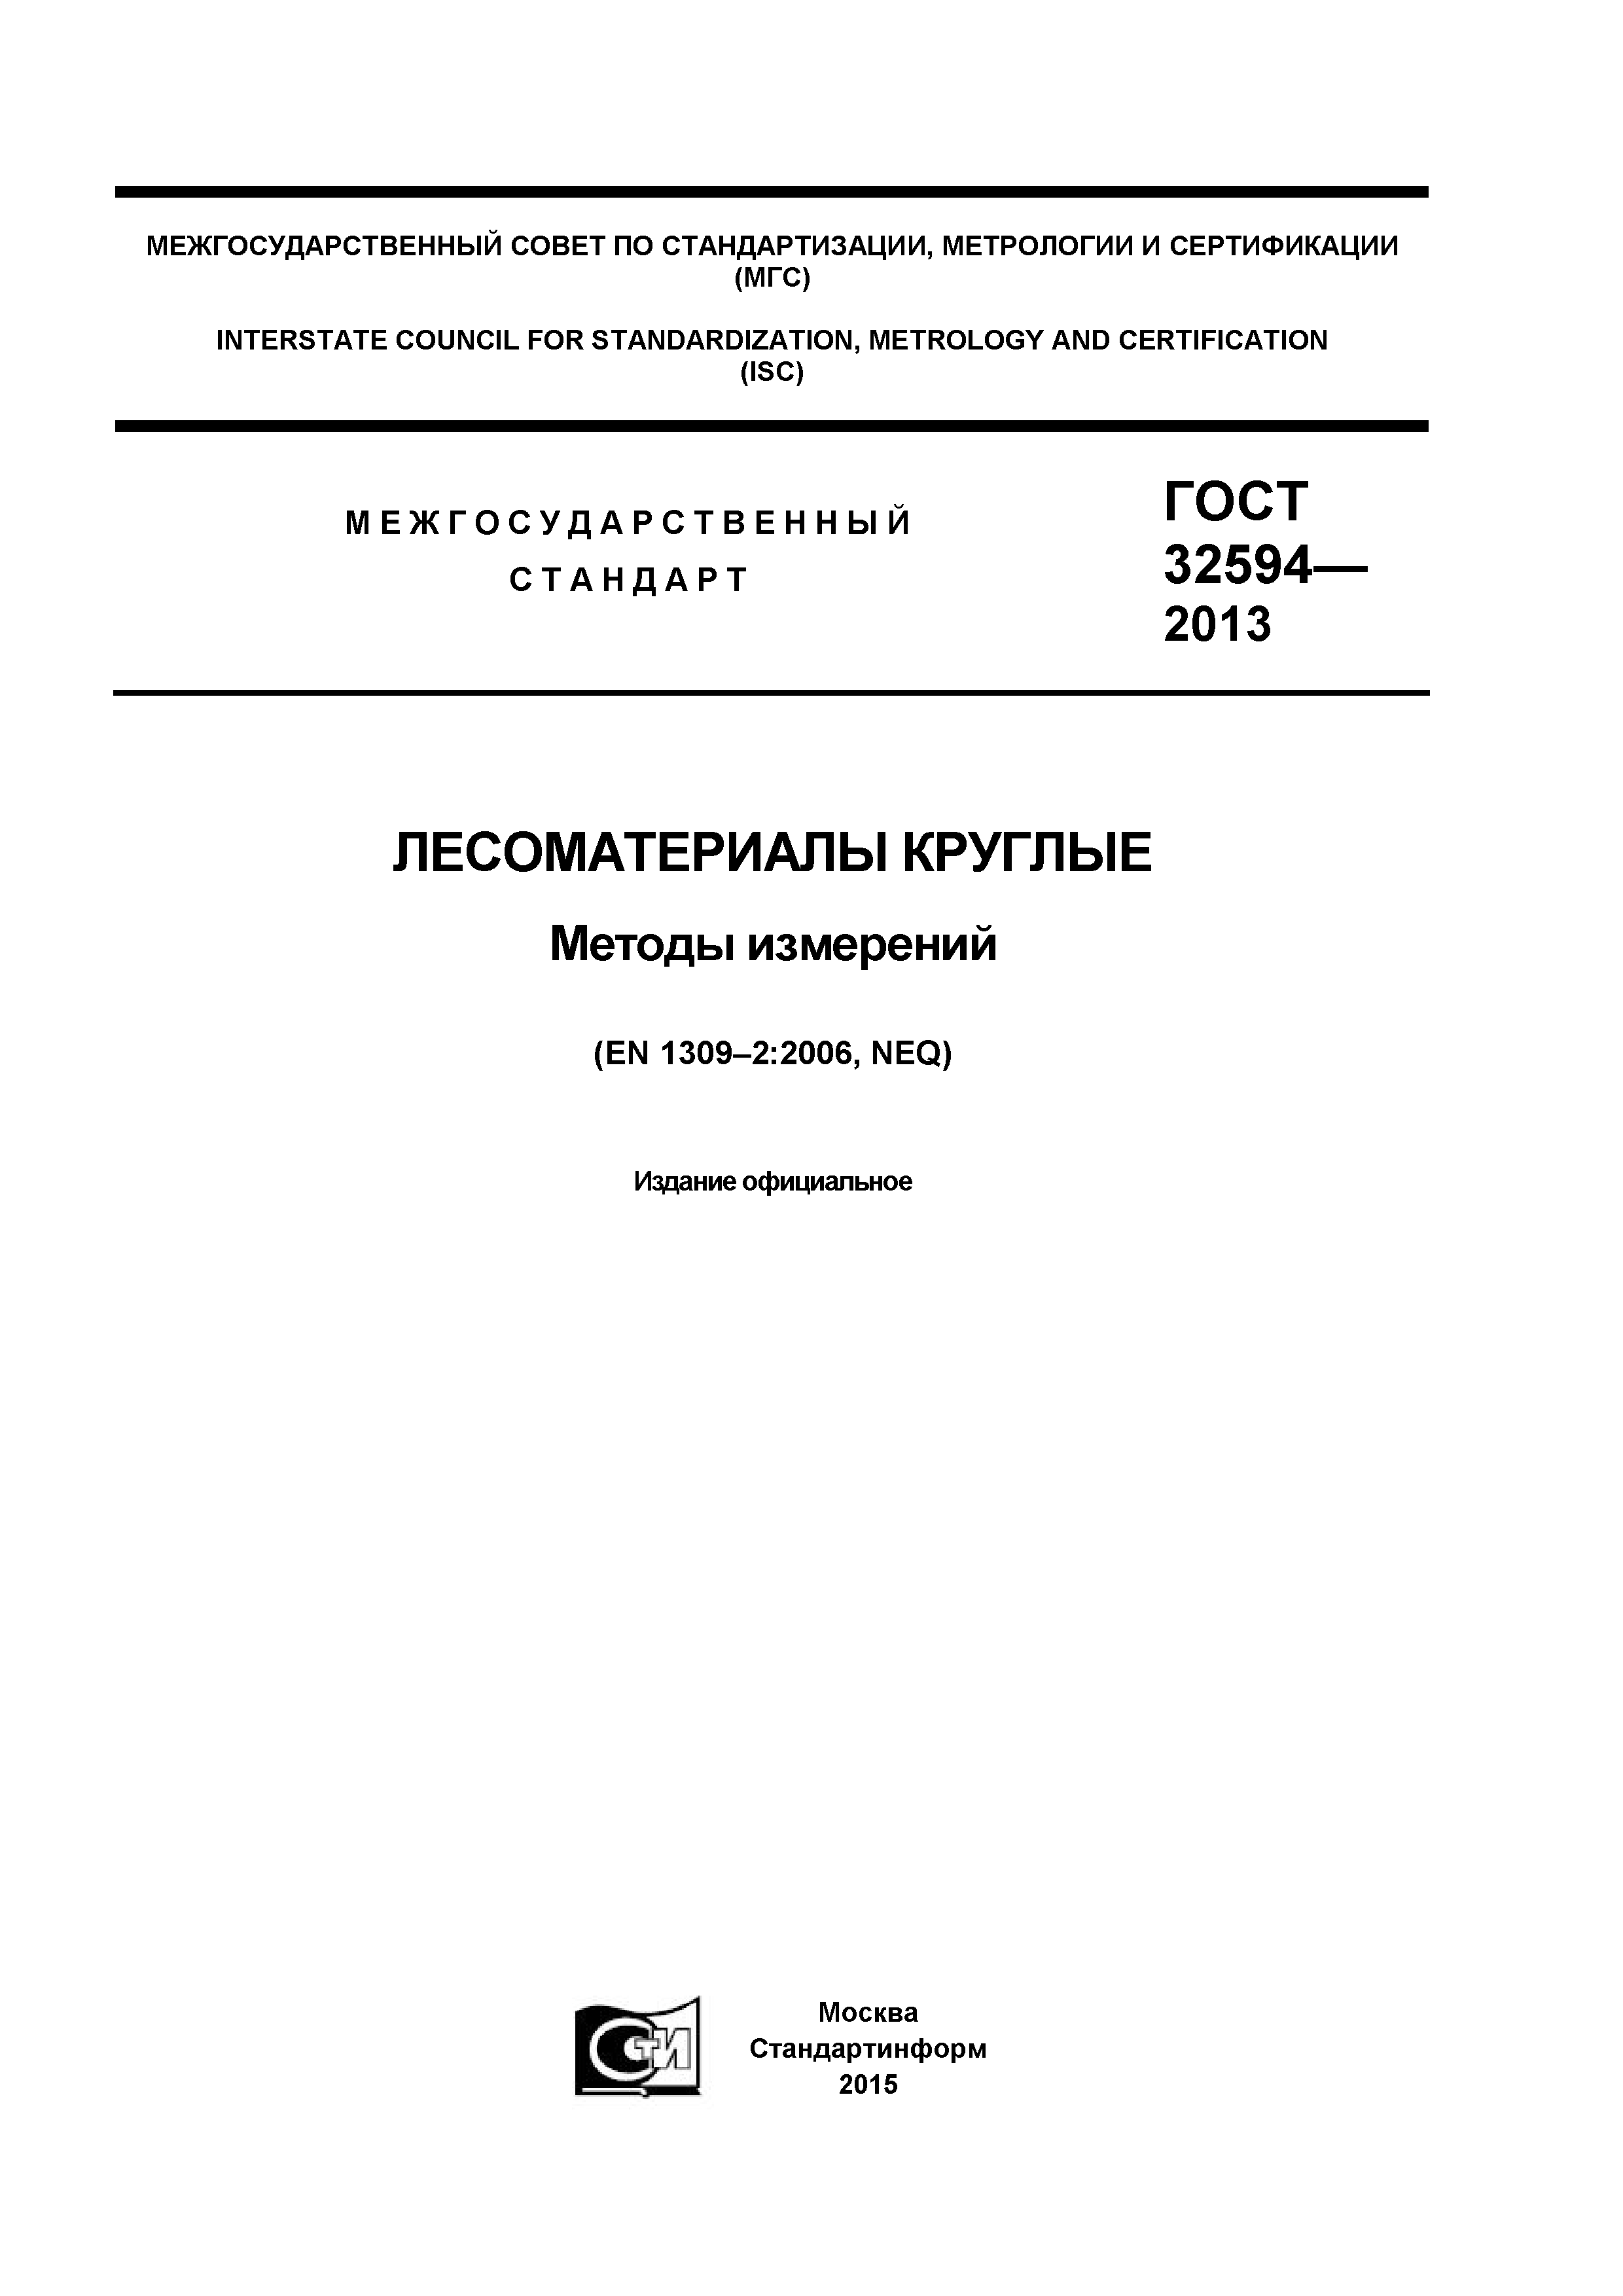 ГОСТ 32594-2013 лесоматериалы круглые методы